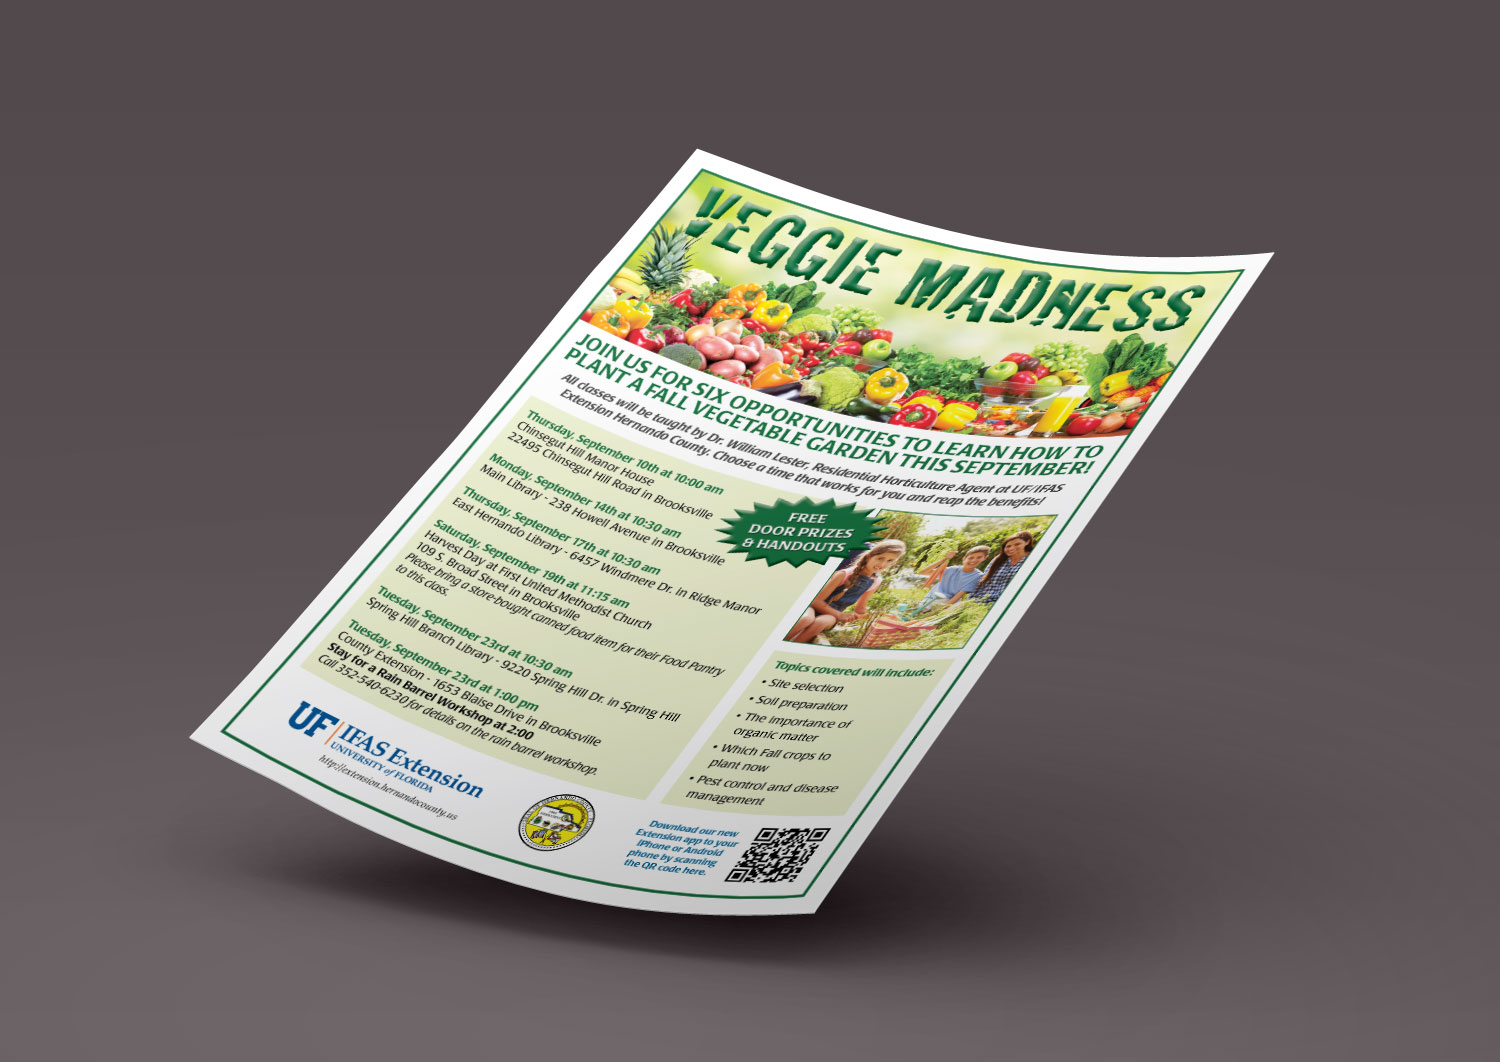 University of Florida Veggie Madness Flyer Printing